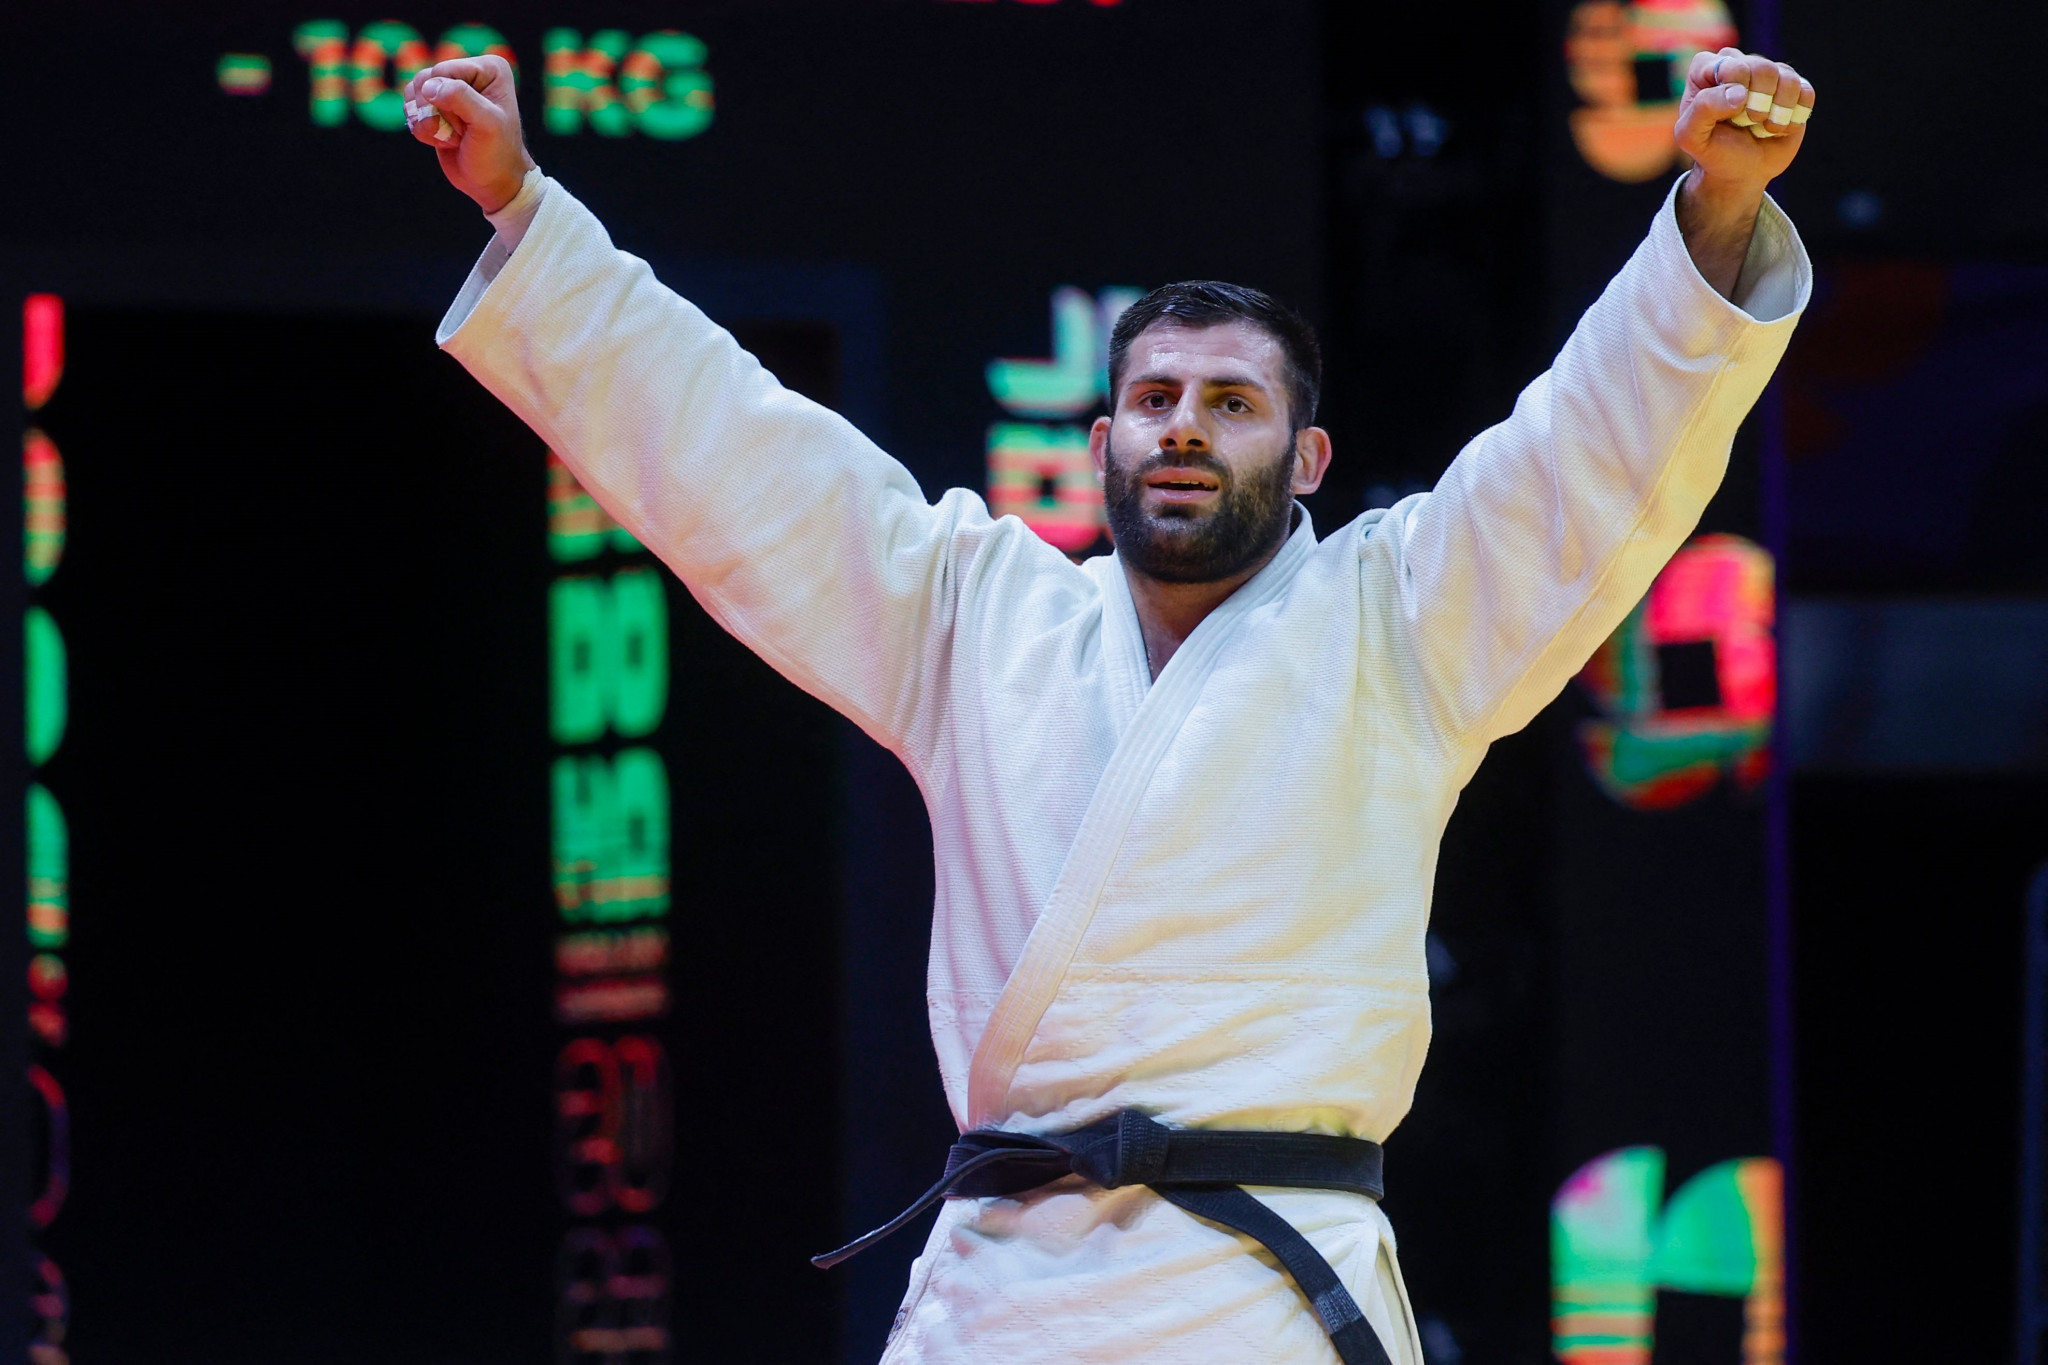 Russian judoka Arman Adamian celebrates after winning men's under-100kg gold in Doha ©Getty Images